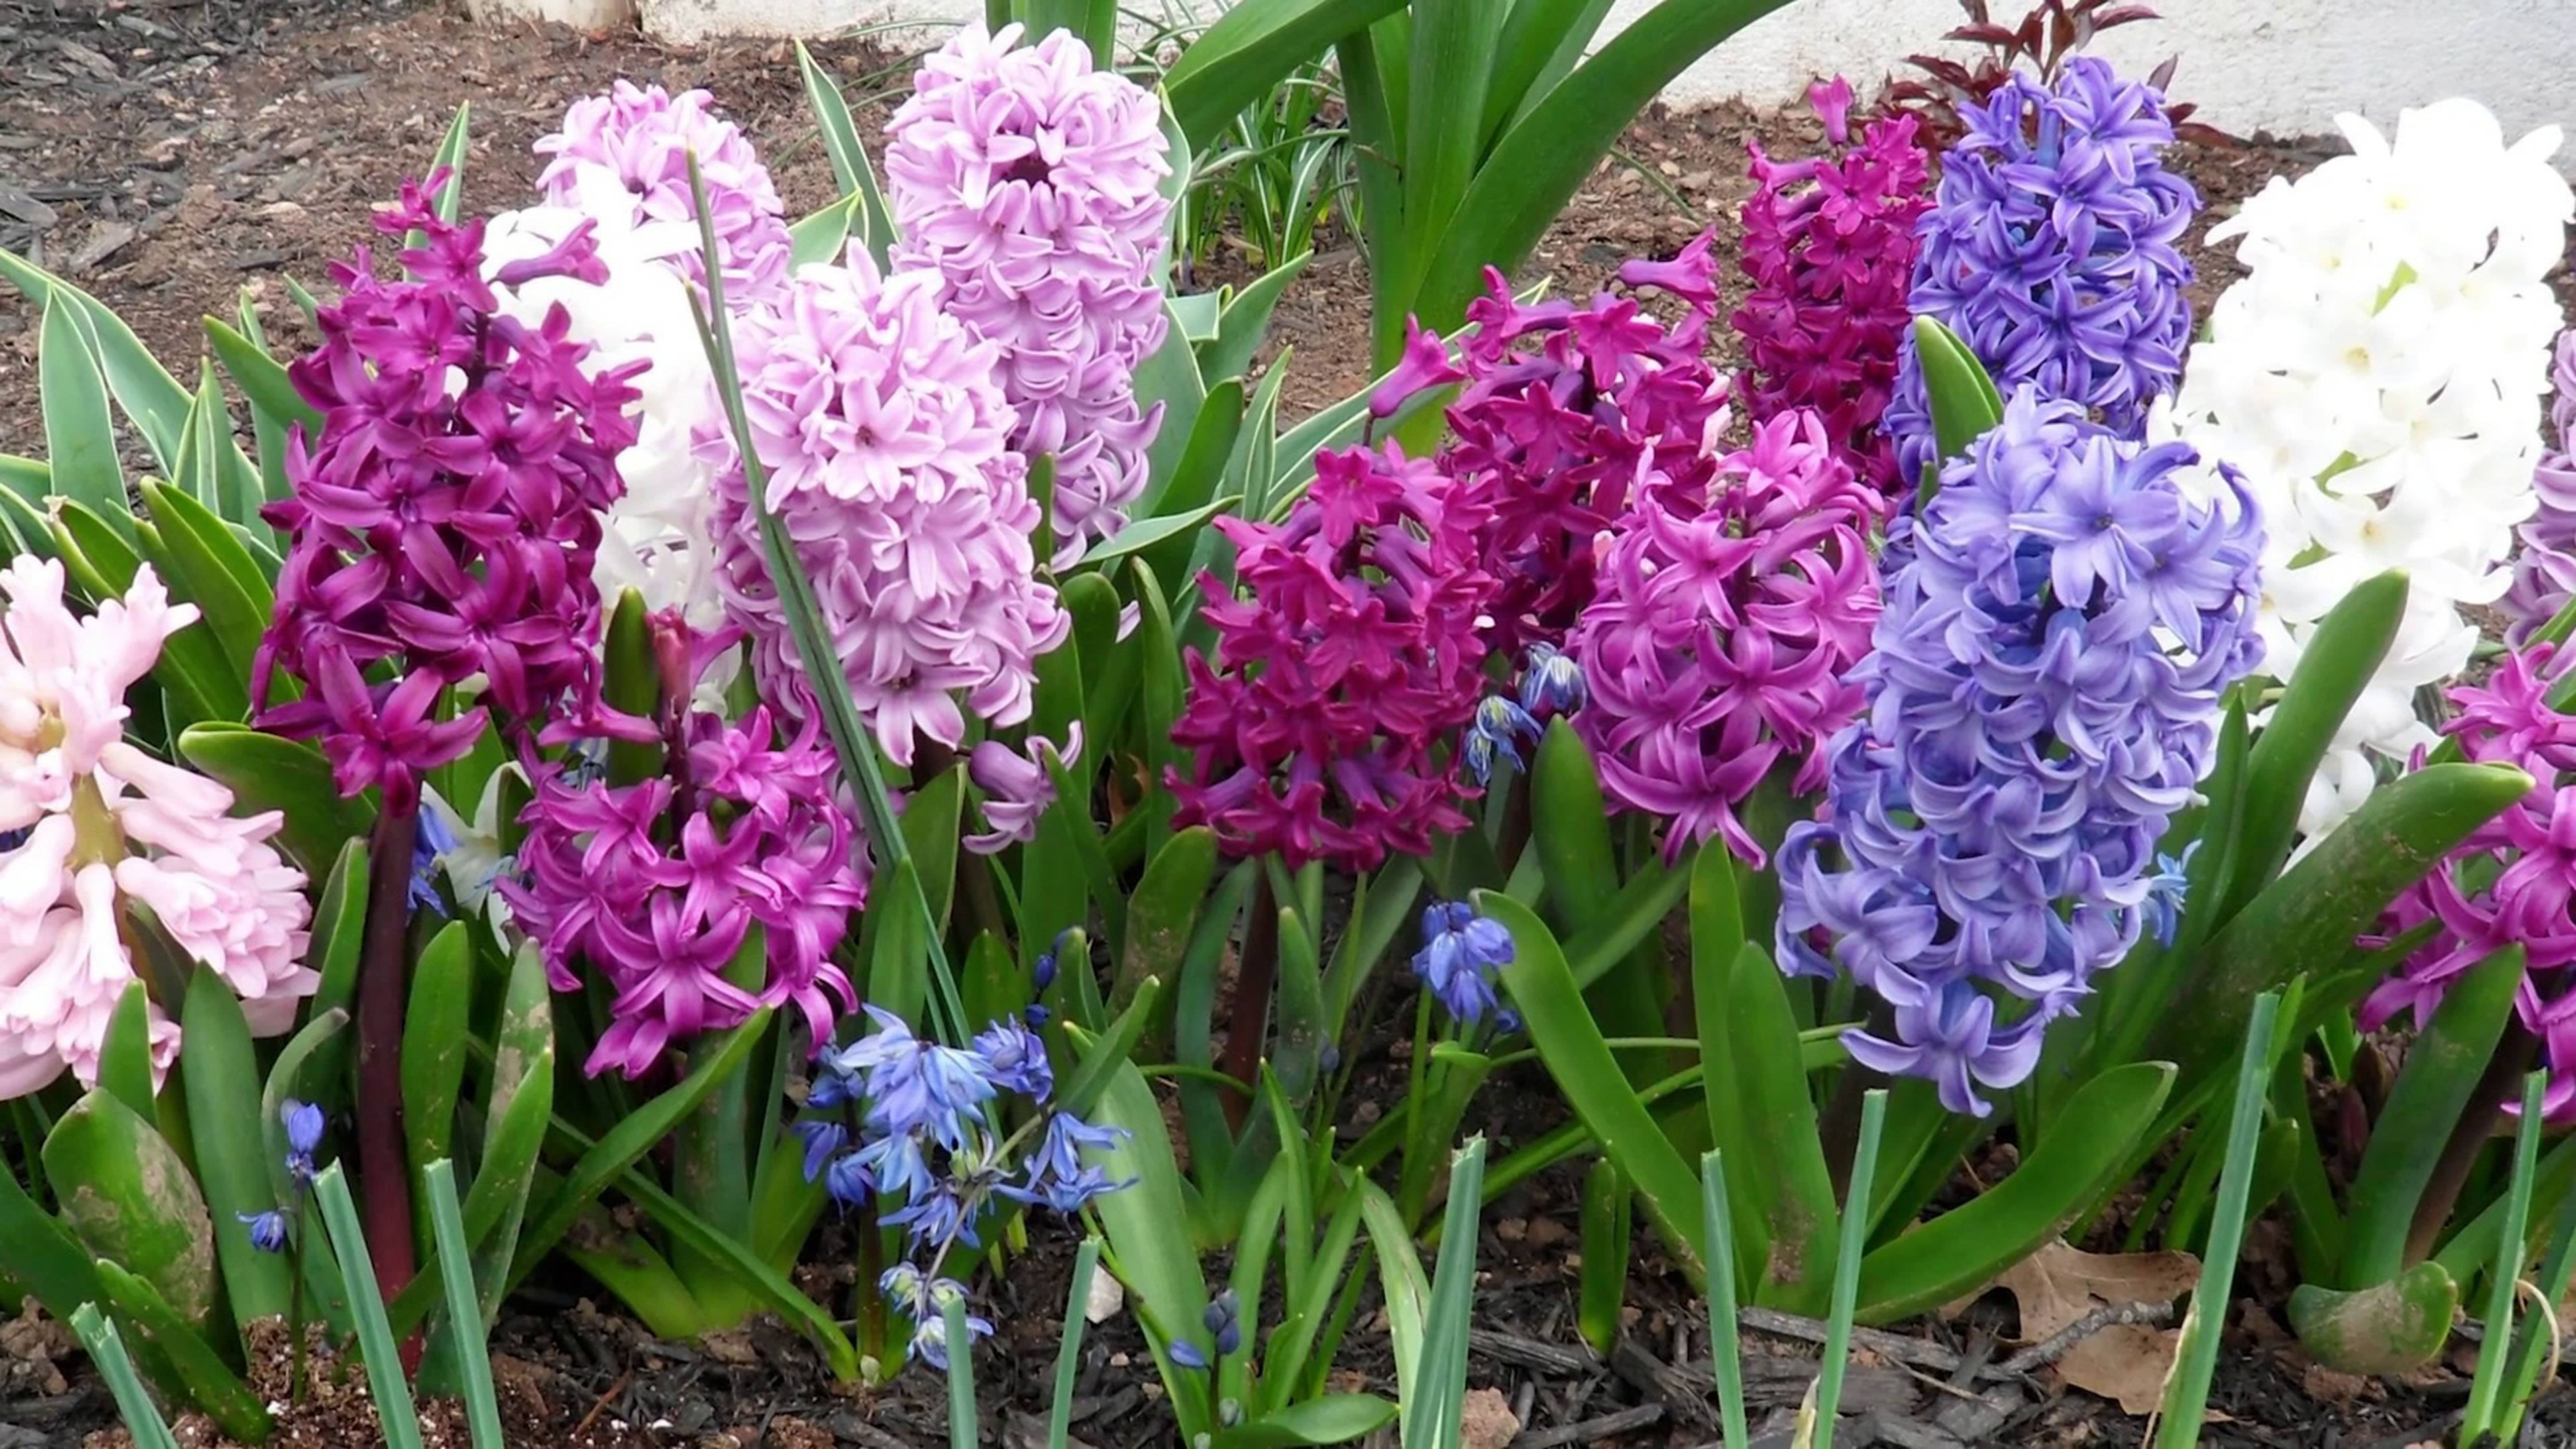 Colorful Hyacinths